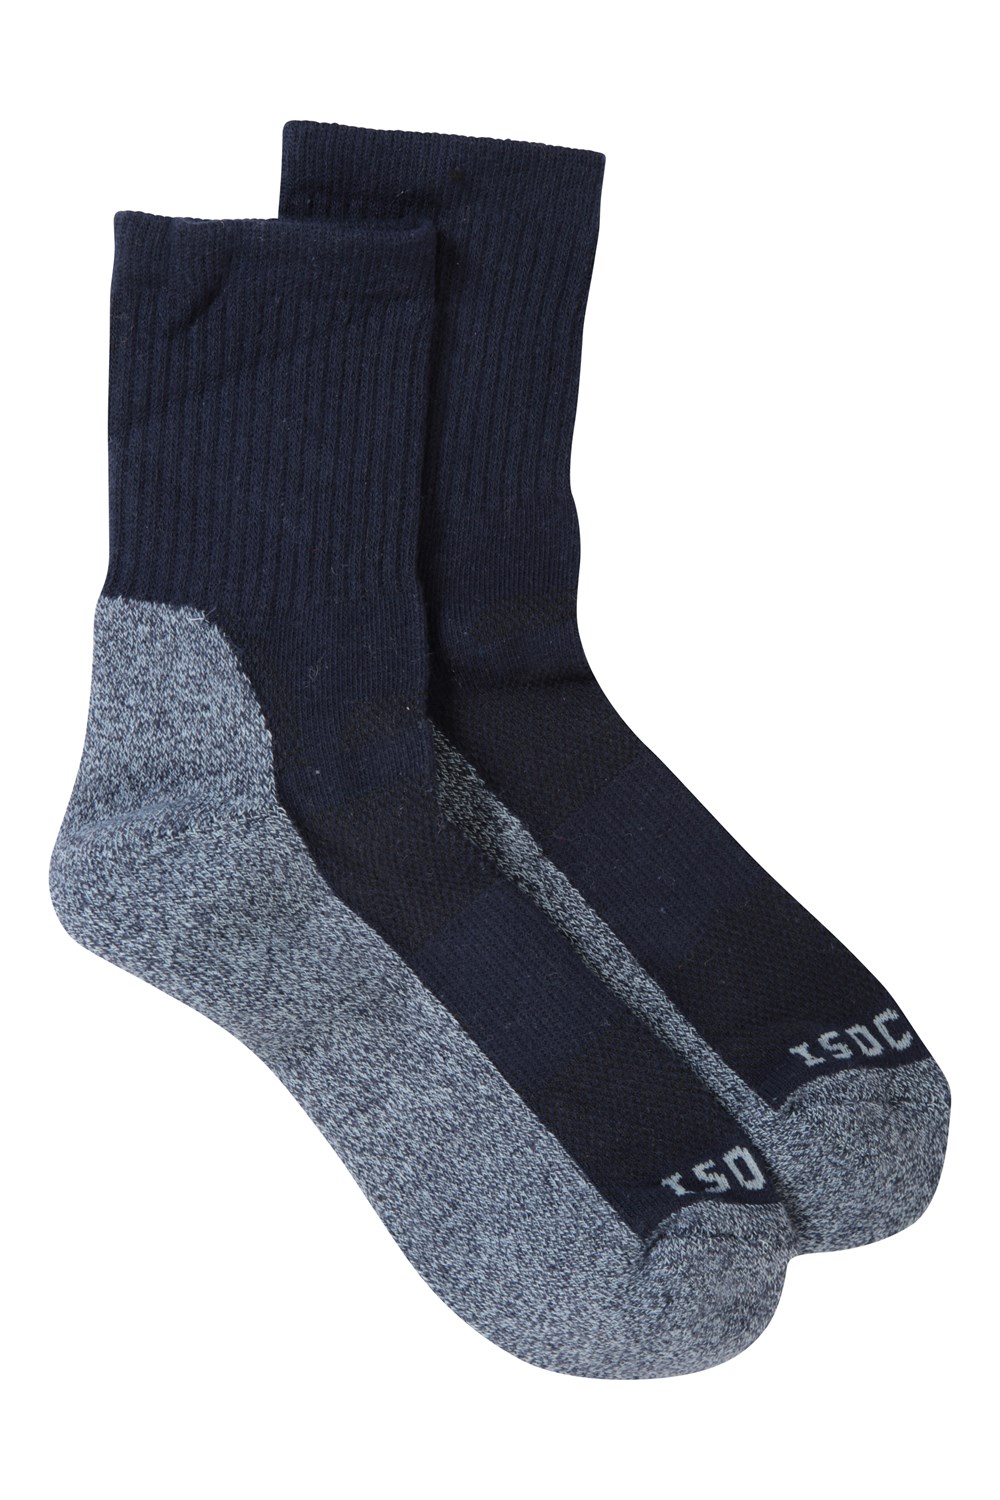 Mountain Warehouse IsoCool Womens Trekker Sock Lightweight Durable ...